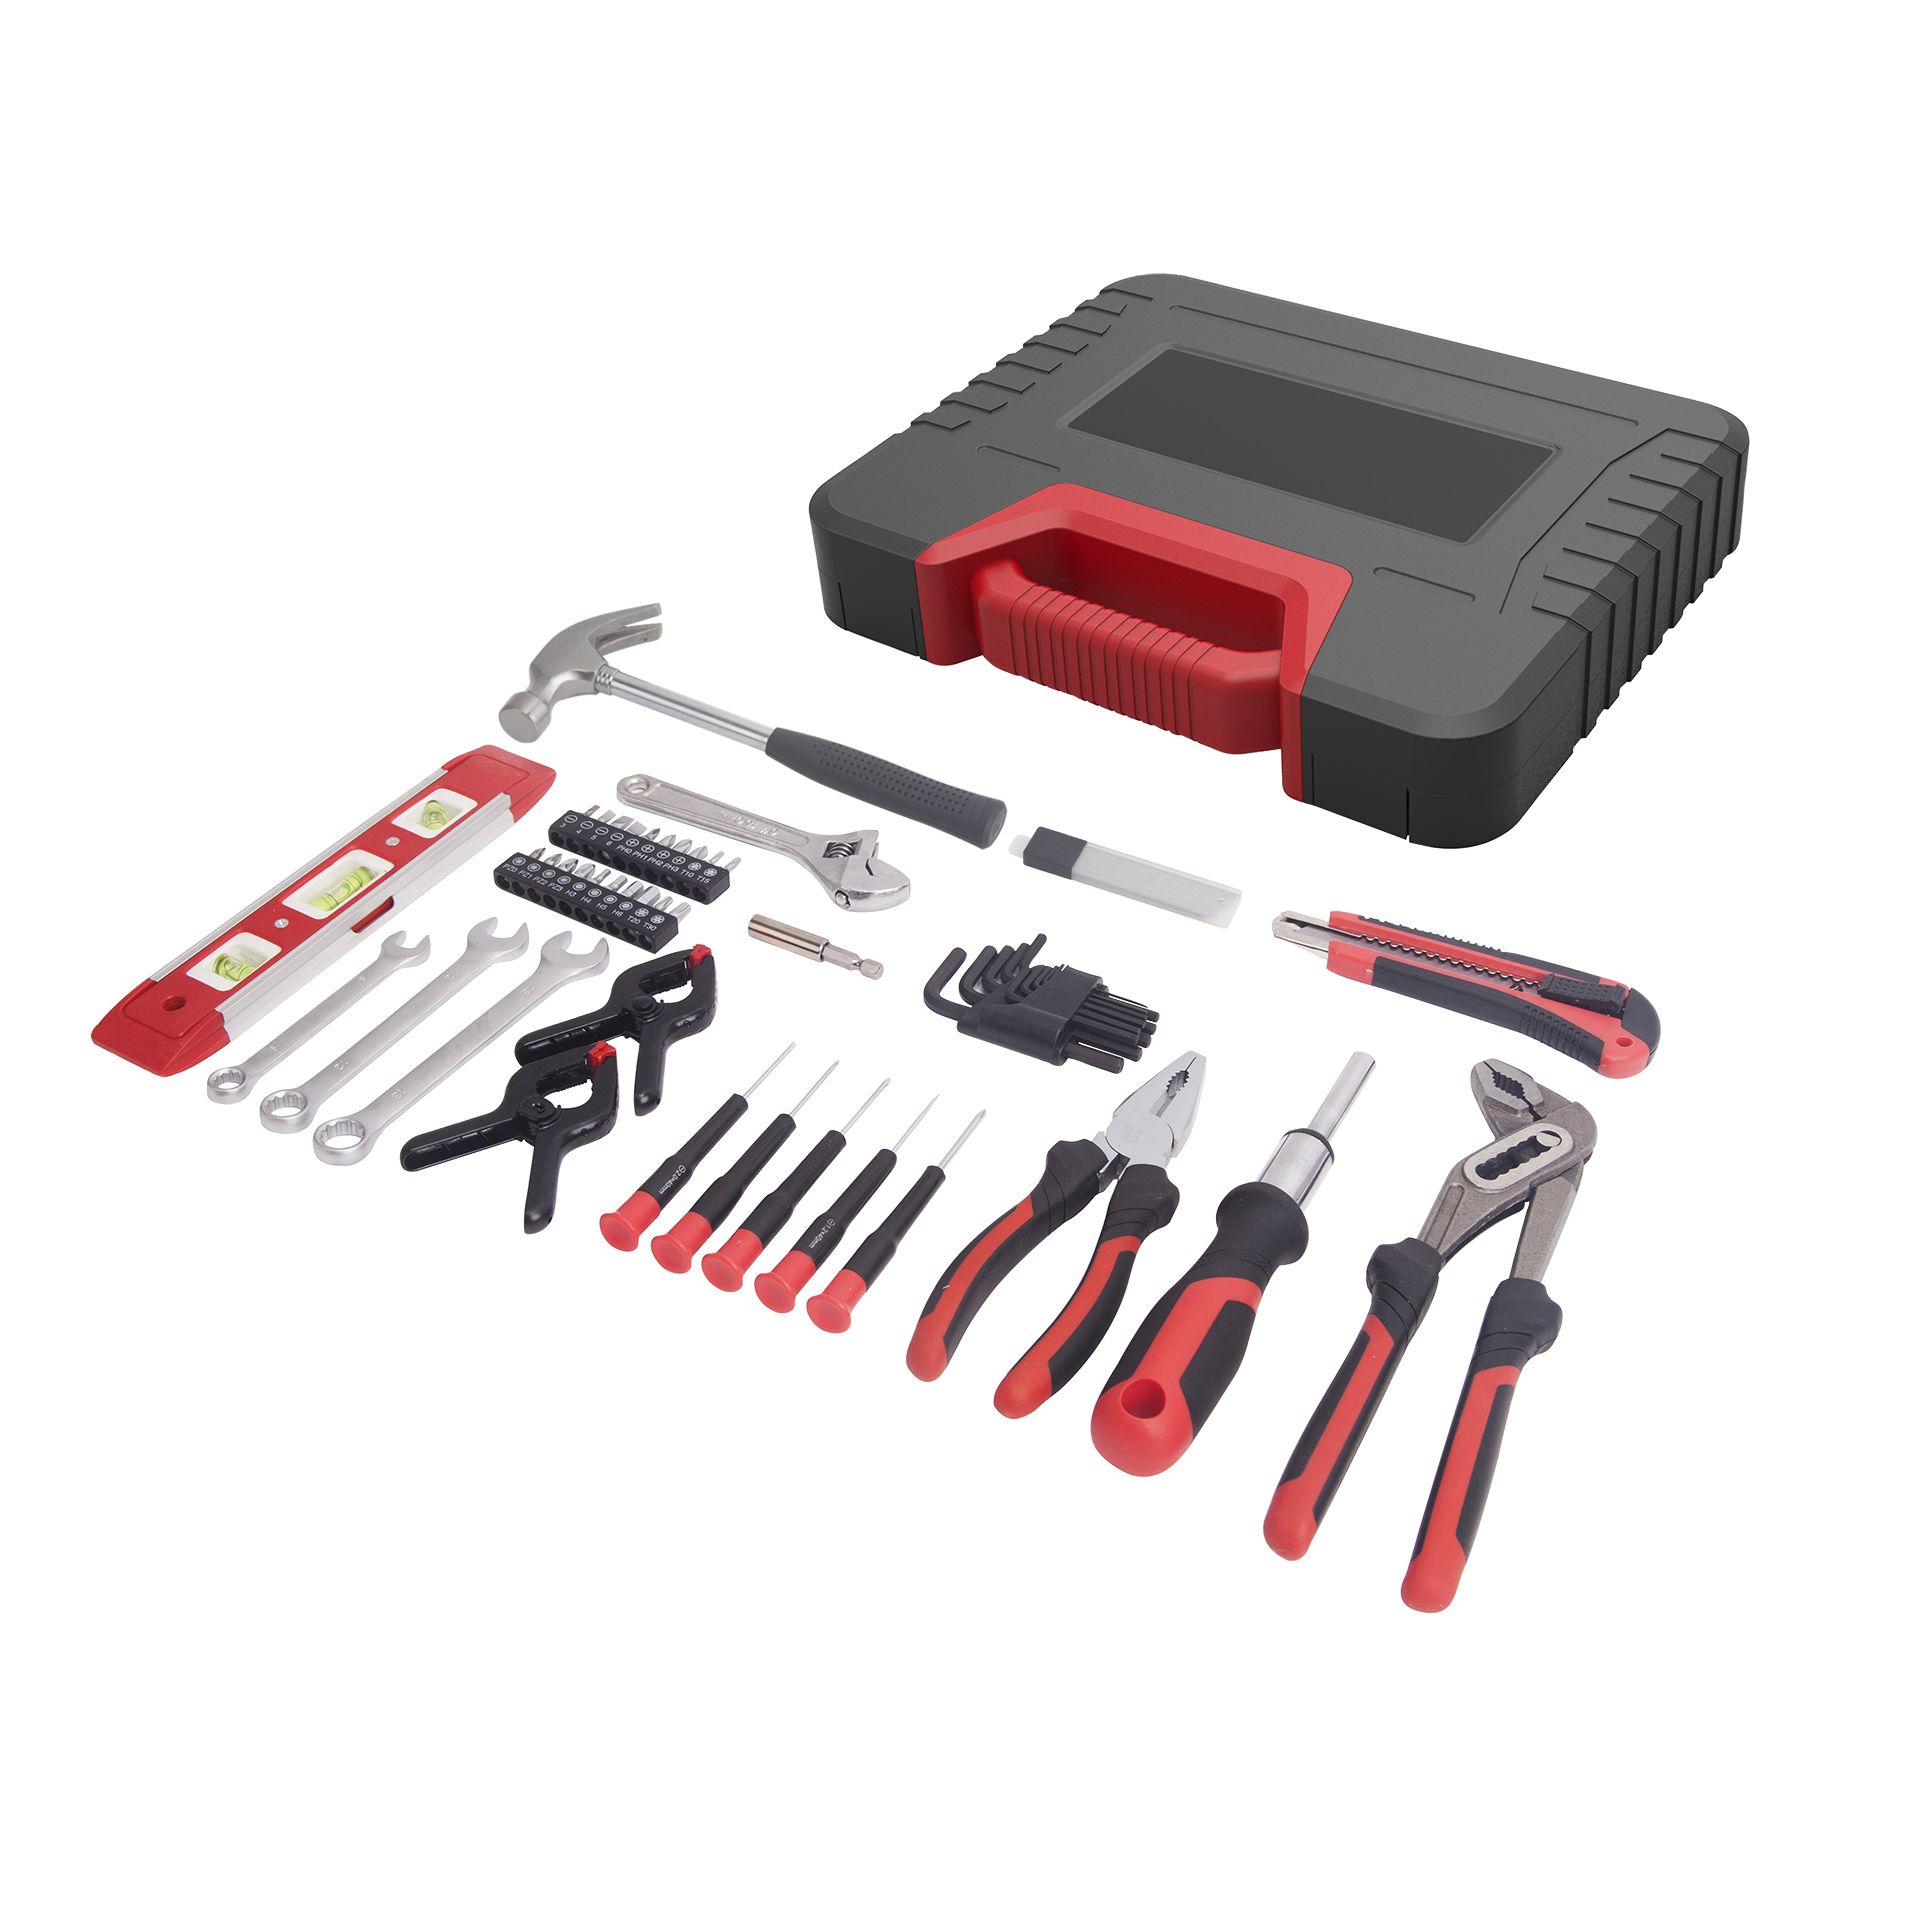 50 piece Black & red Hand tool kit TK02